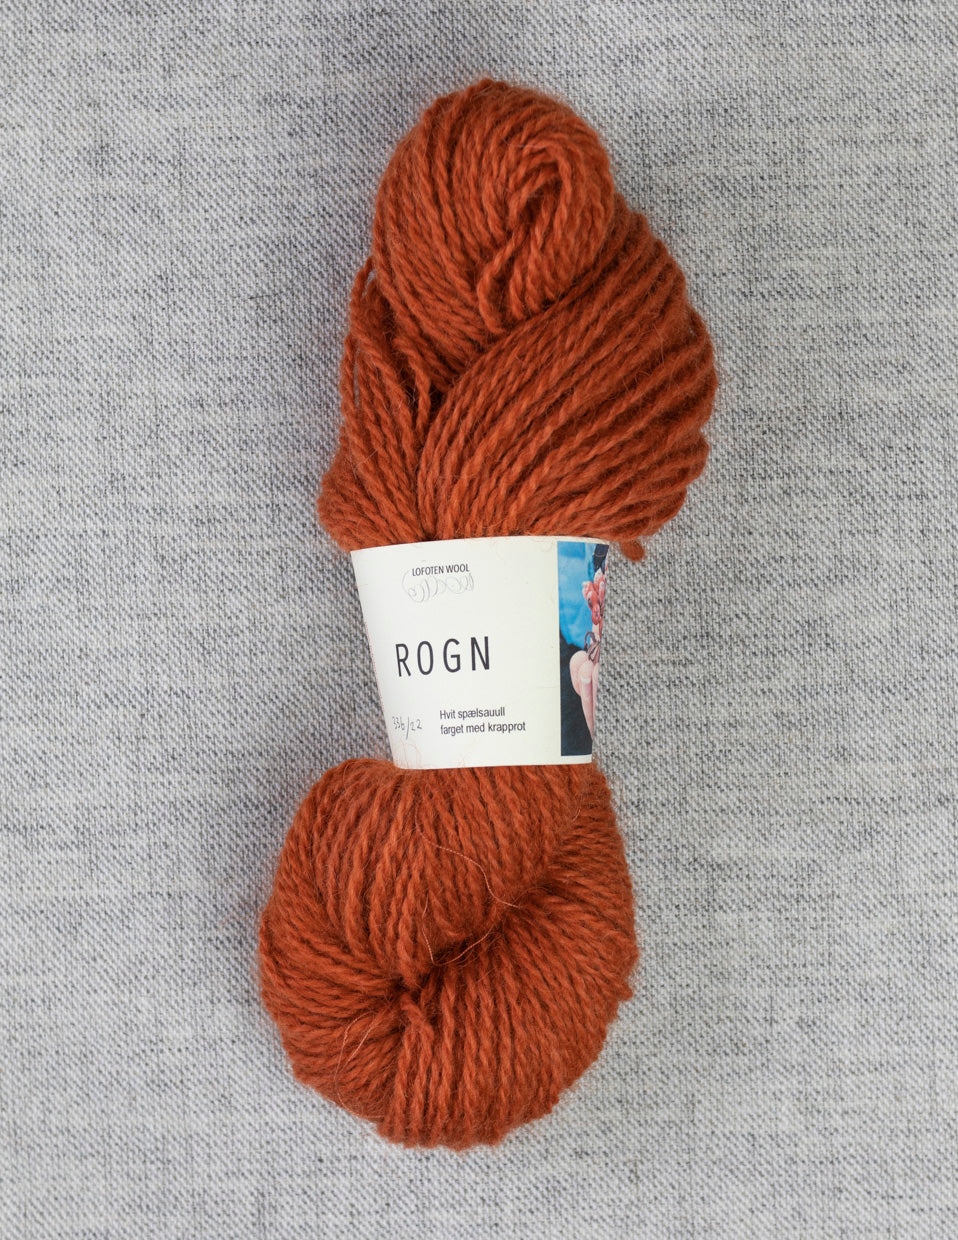 ROGN, plant-dyed yarn from white Spælsau sheep